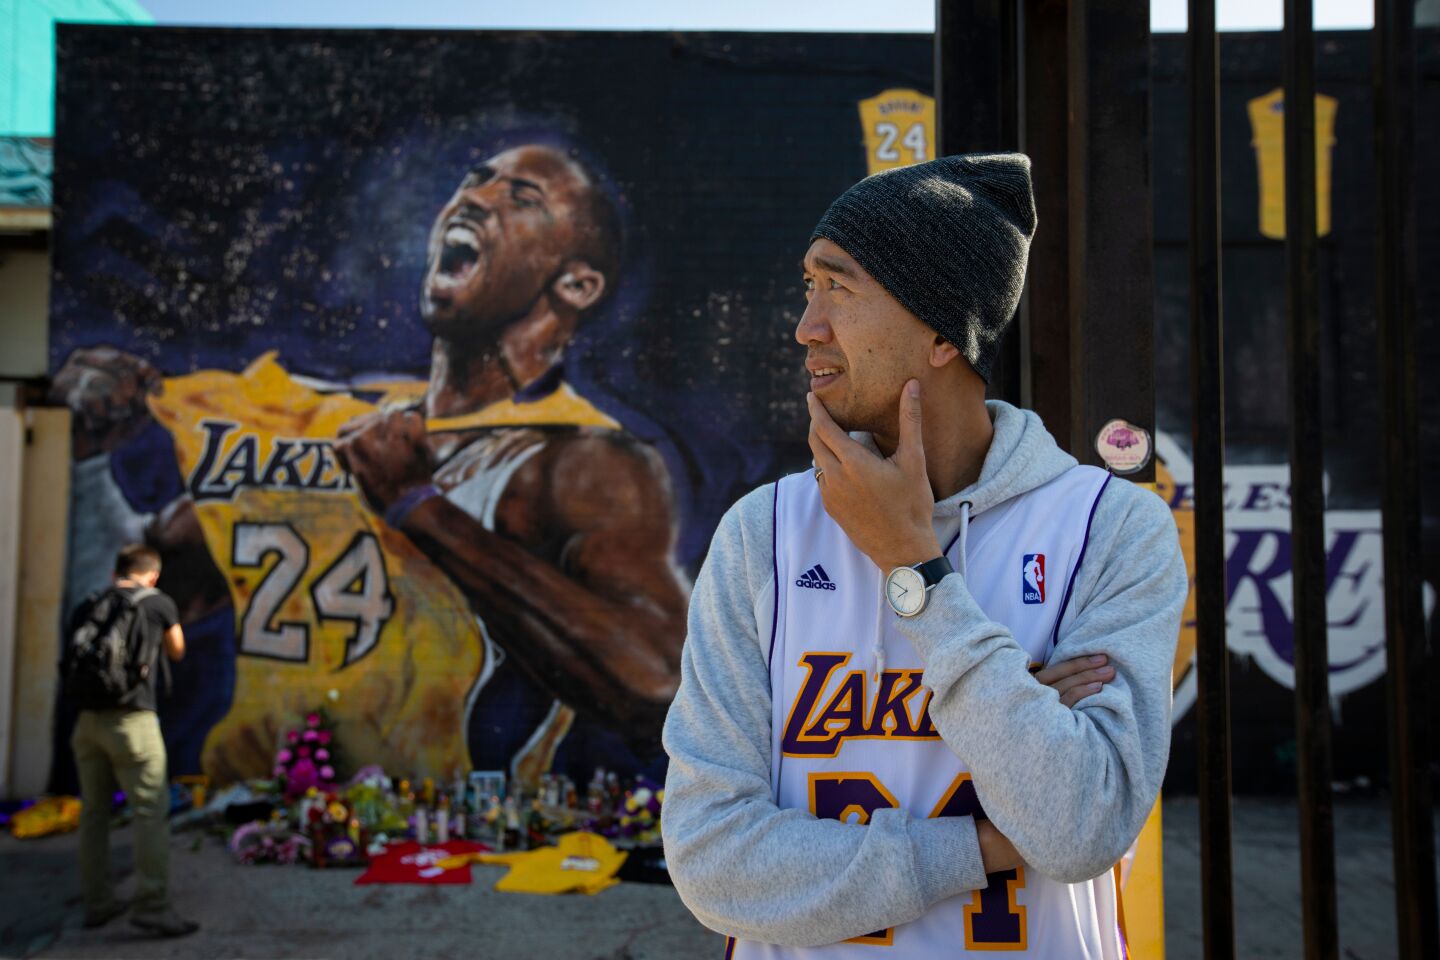 Murals with Kobe's image.